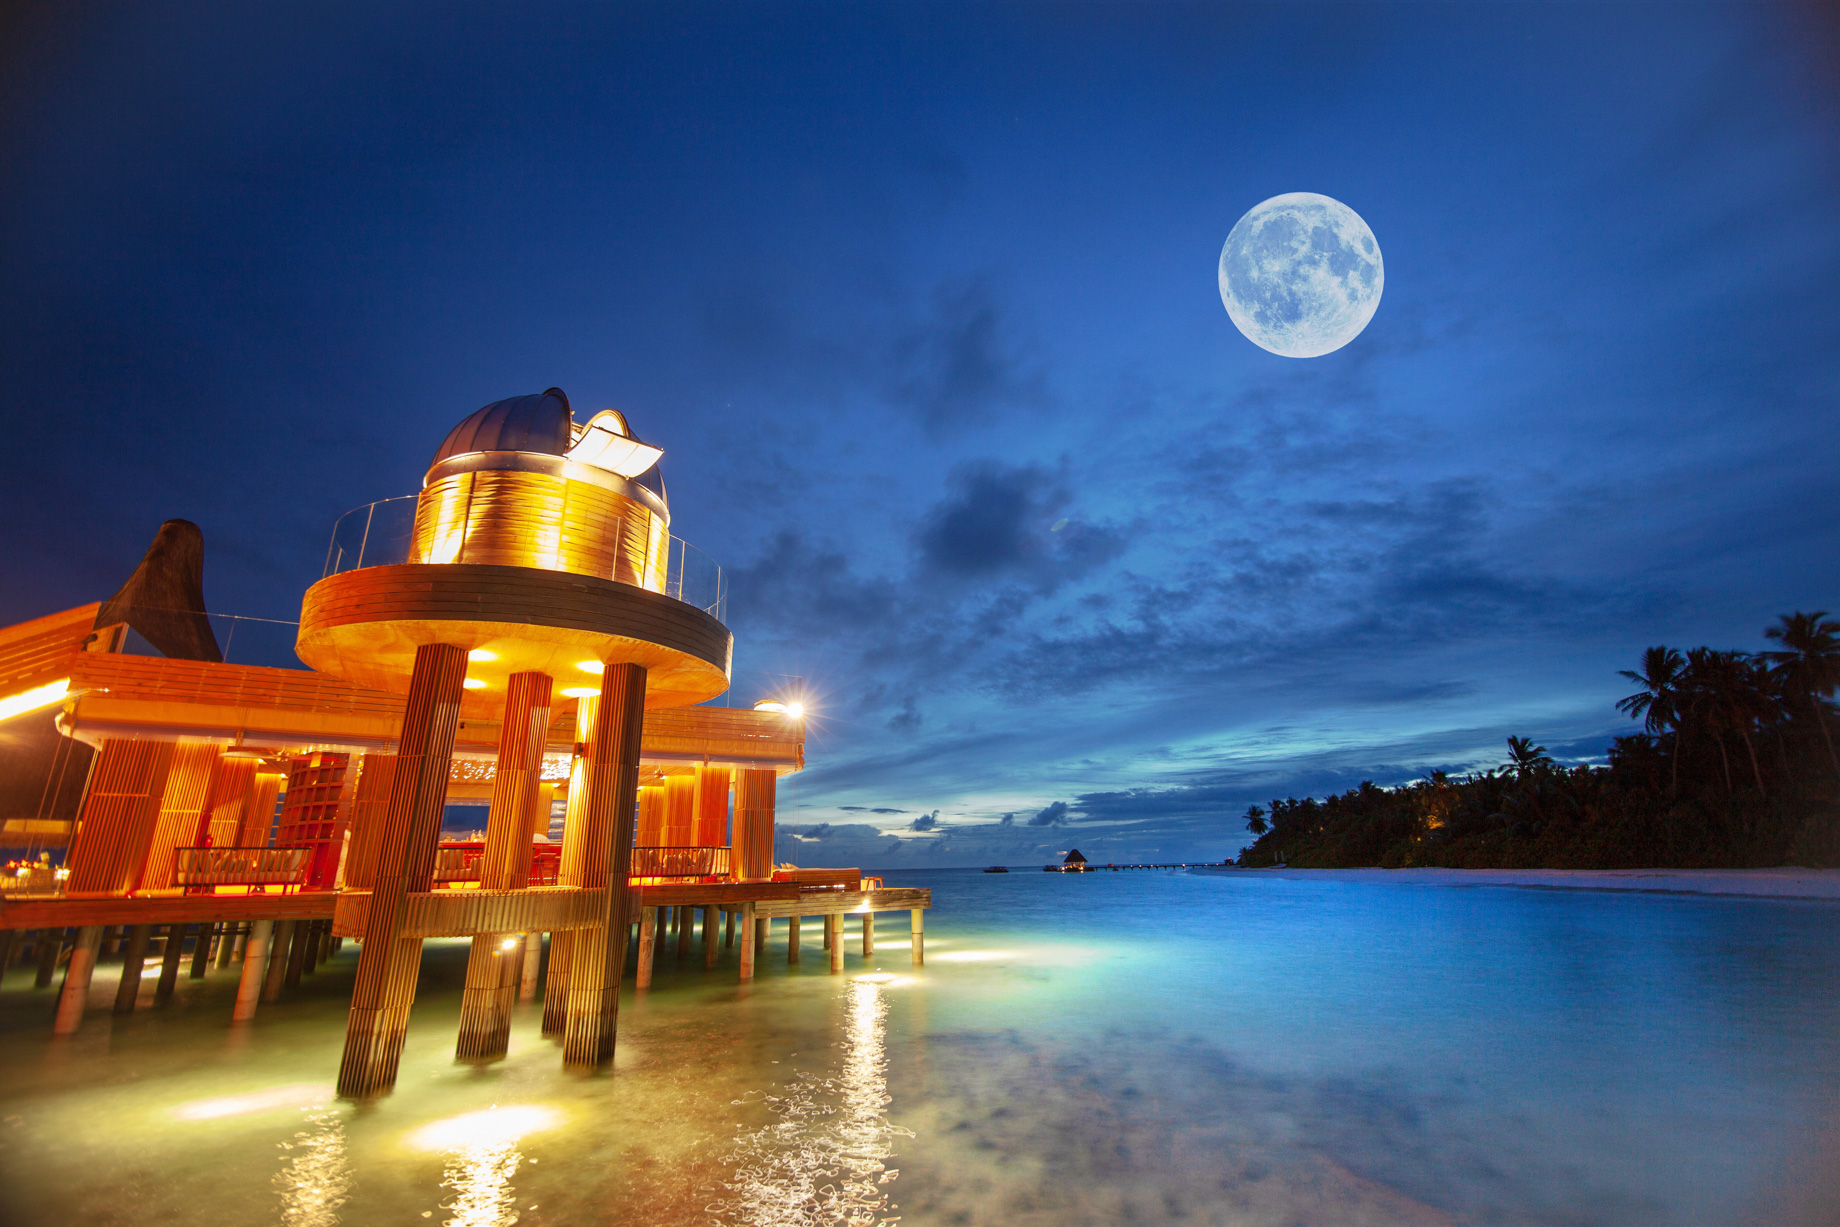 Anantara Kihavah Maldives Villas Resort – Baa Atoll, Maldives – Sky Observatory Complex